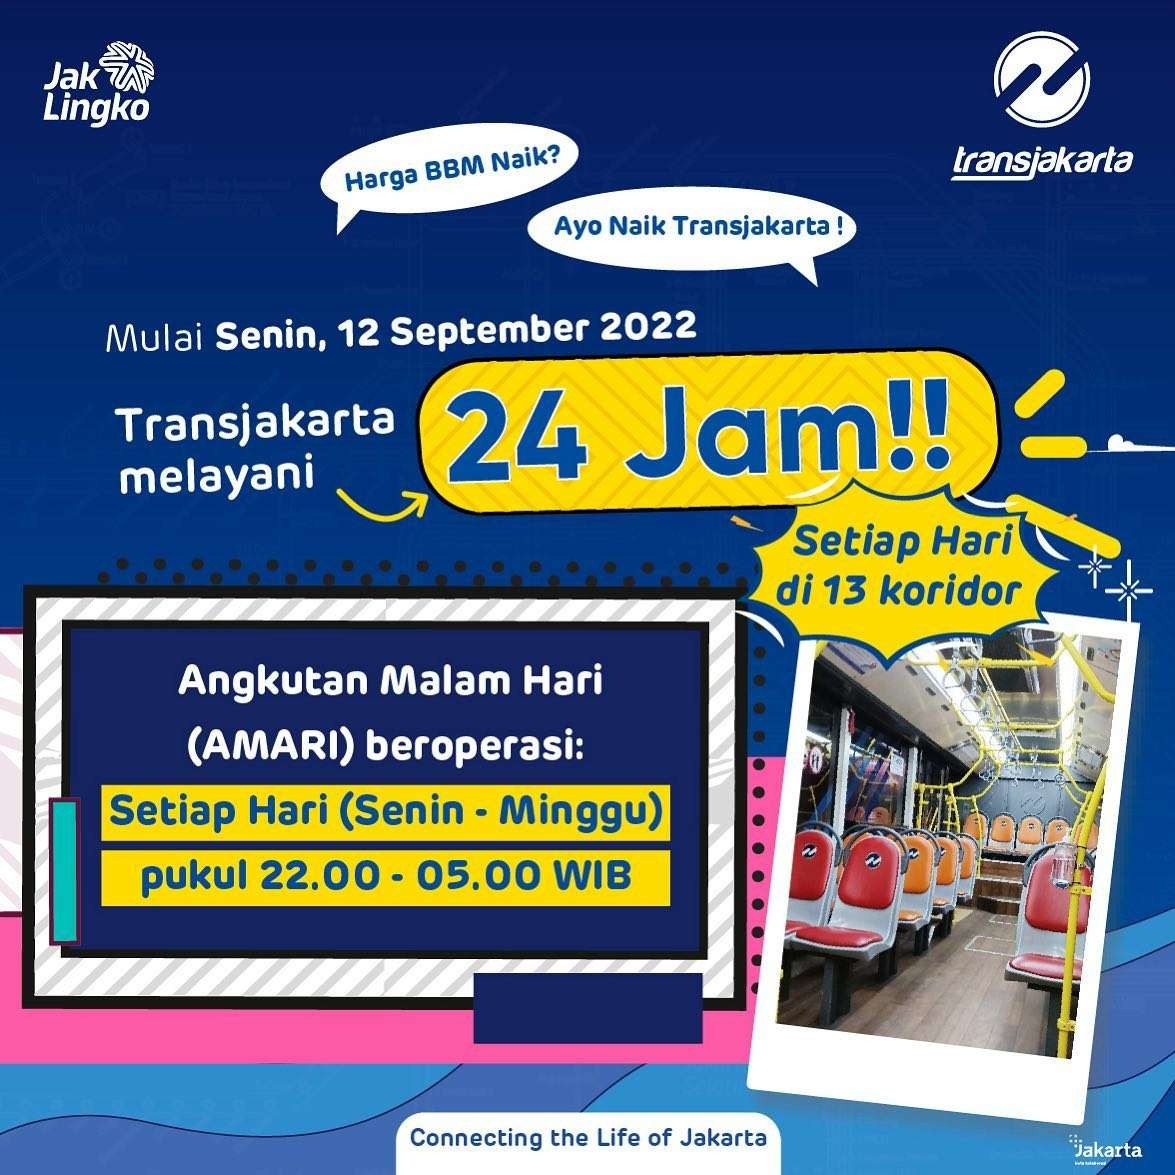 Bus TransJakarta beroperasi 24 jam mulai hari ini di 13 koridor.(Foto: Instagram @pt_transjakarta)